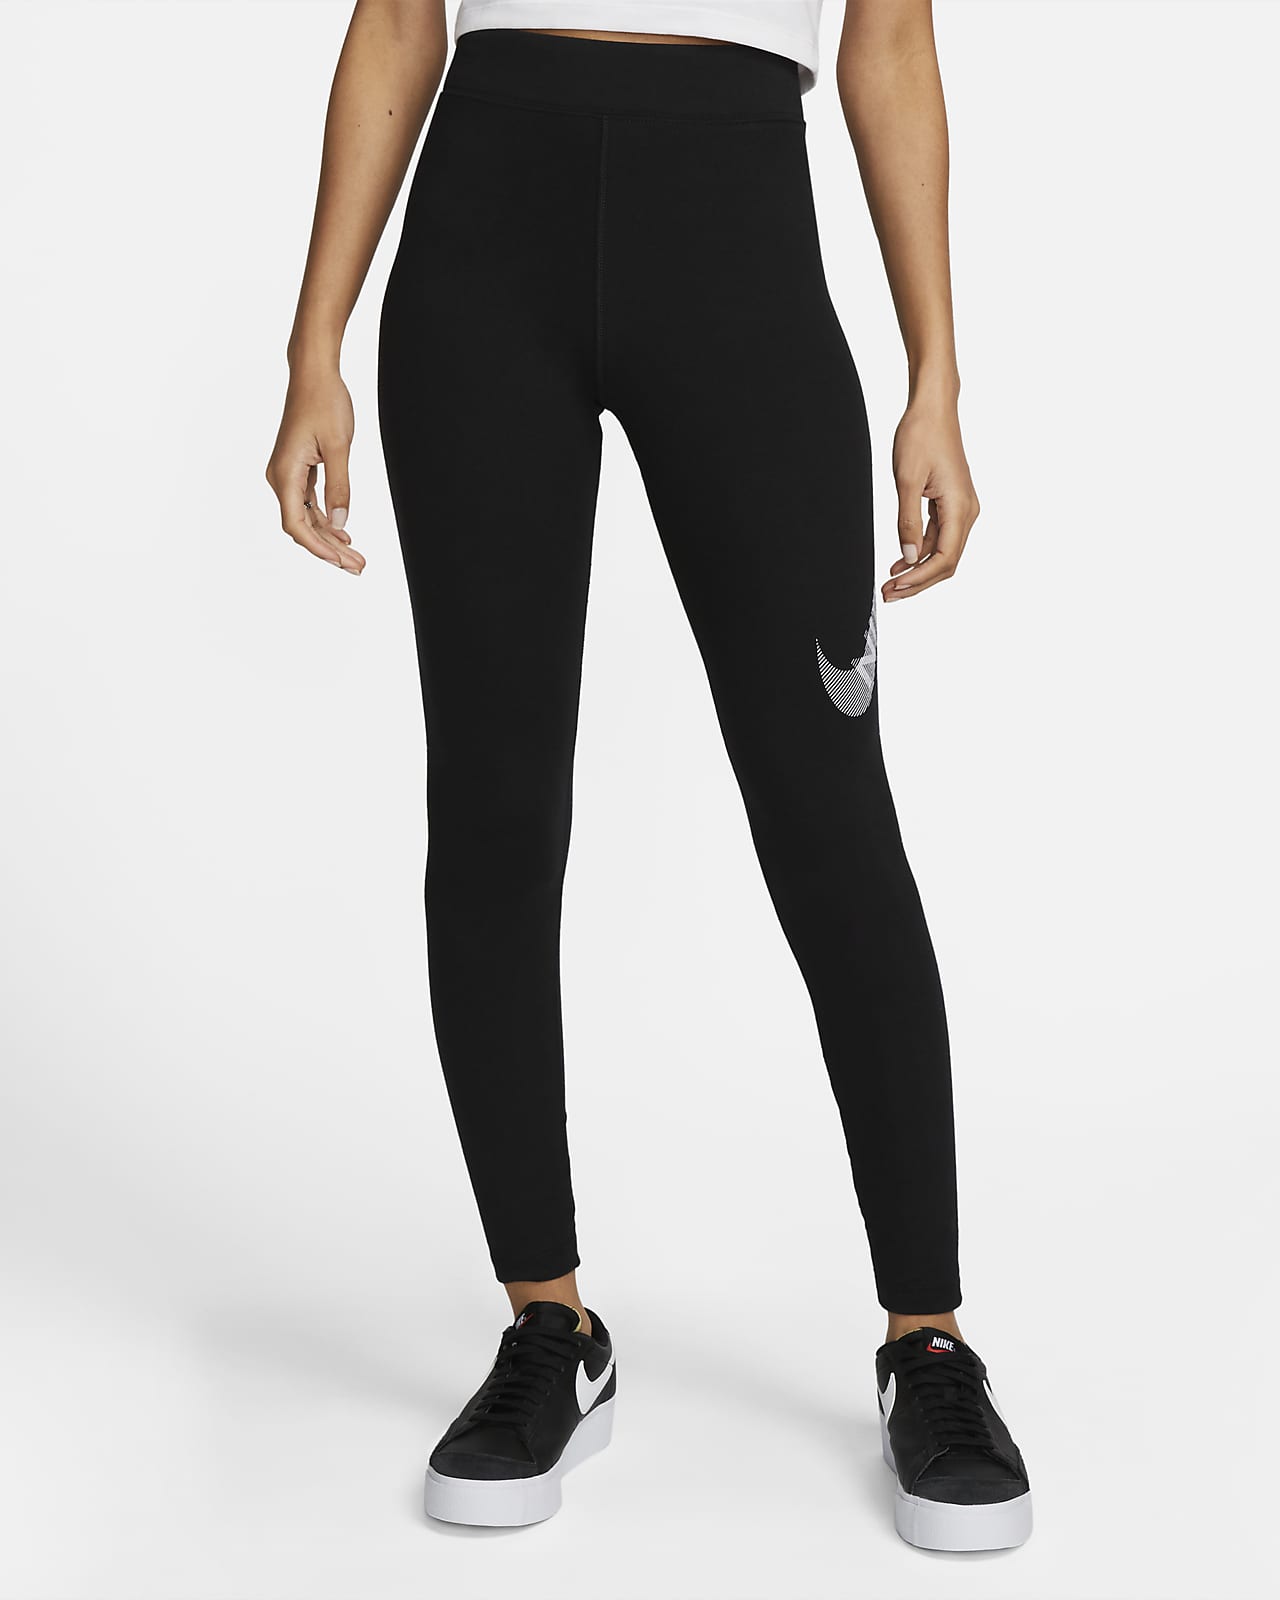 Legging Nike Sportswear Club Logo Preta - Compre Agora